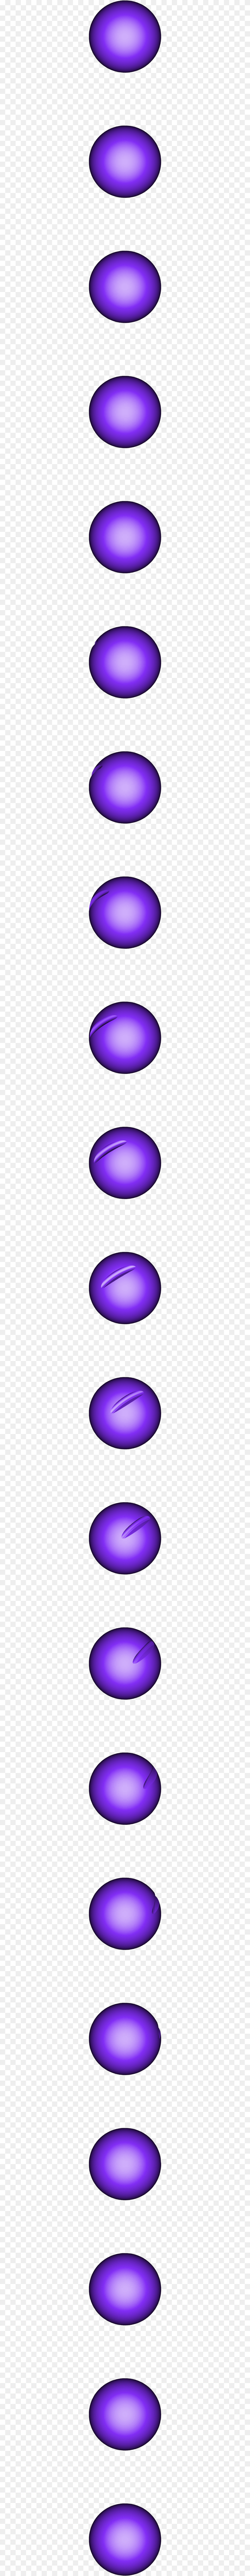 Sphere, Home Decor, Light, Lighting, Purple Png Image